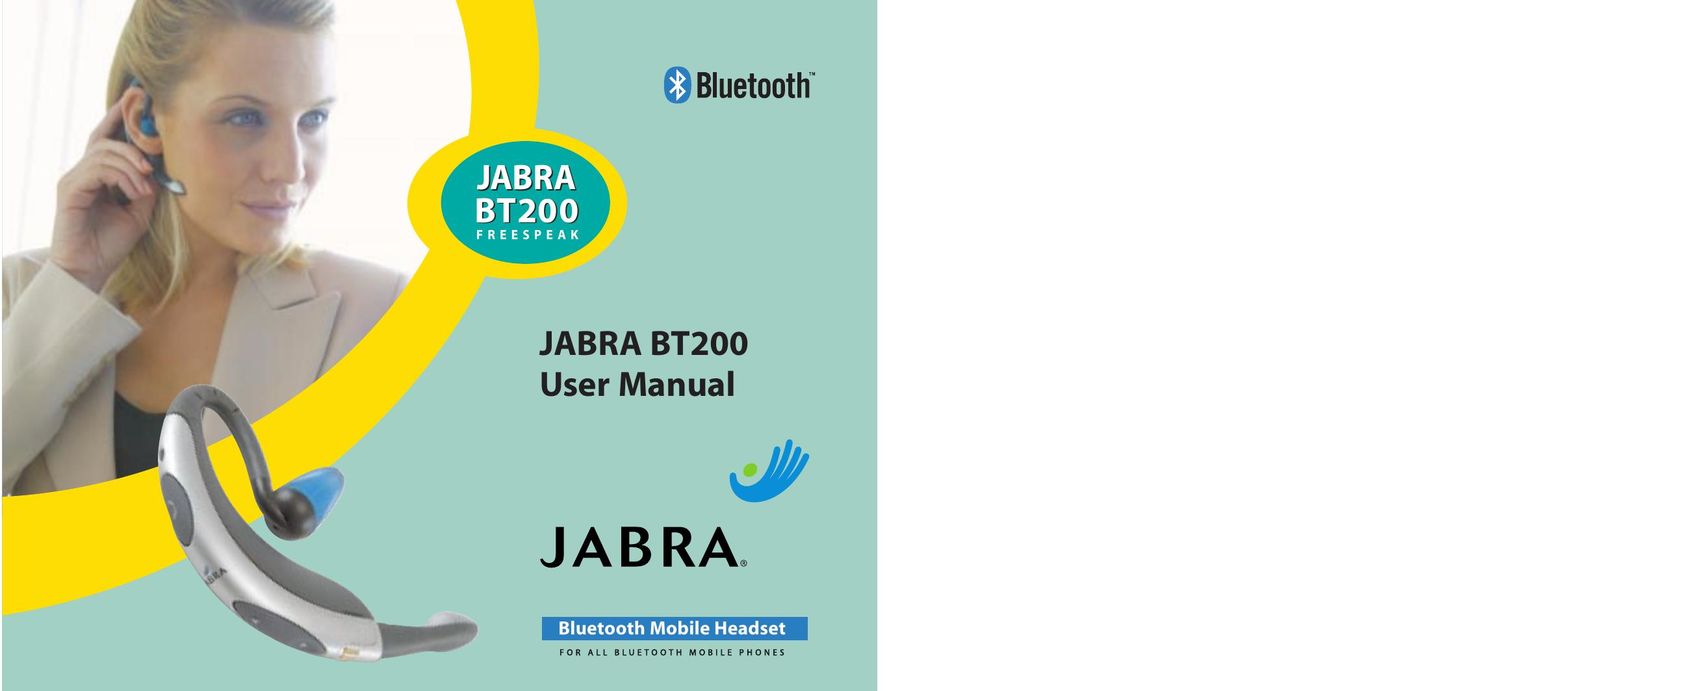 Jabra BT200 Bluetooth Headset User Manual